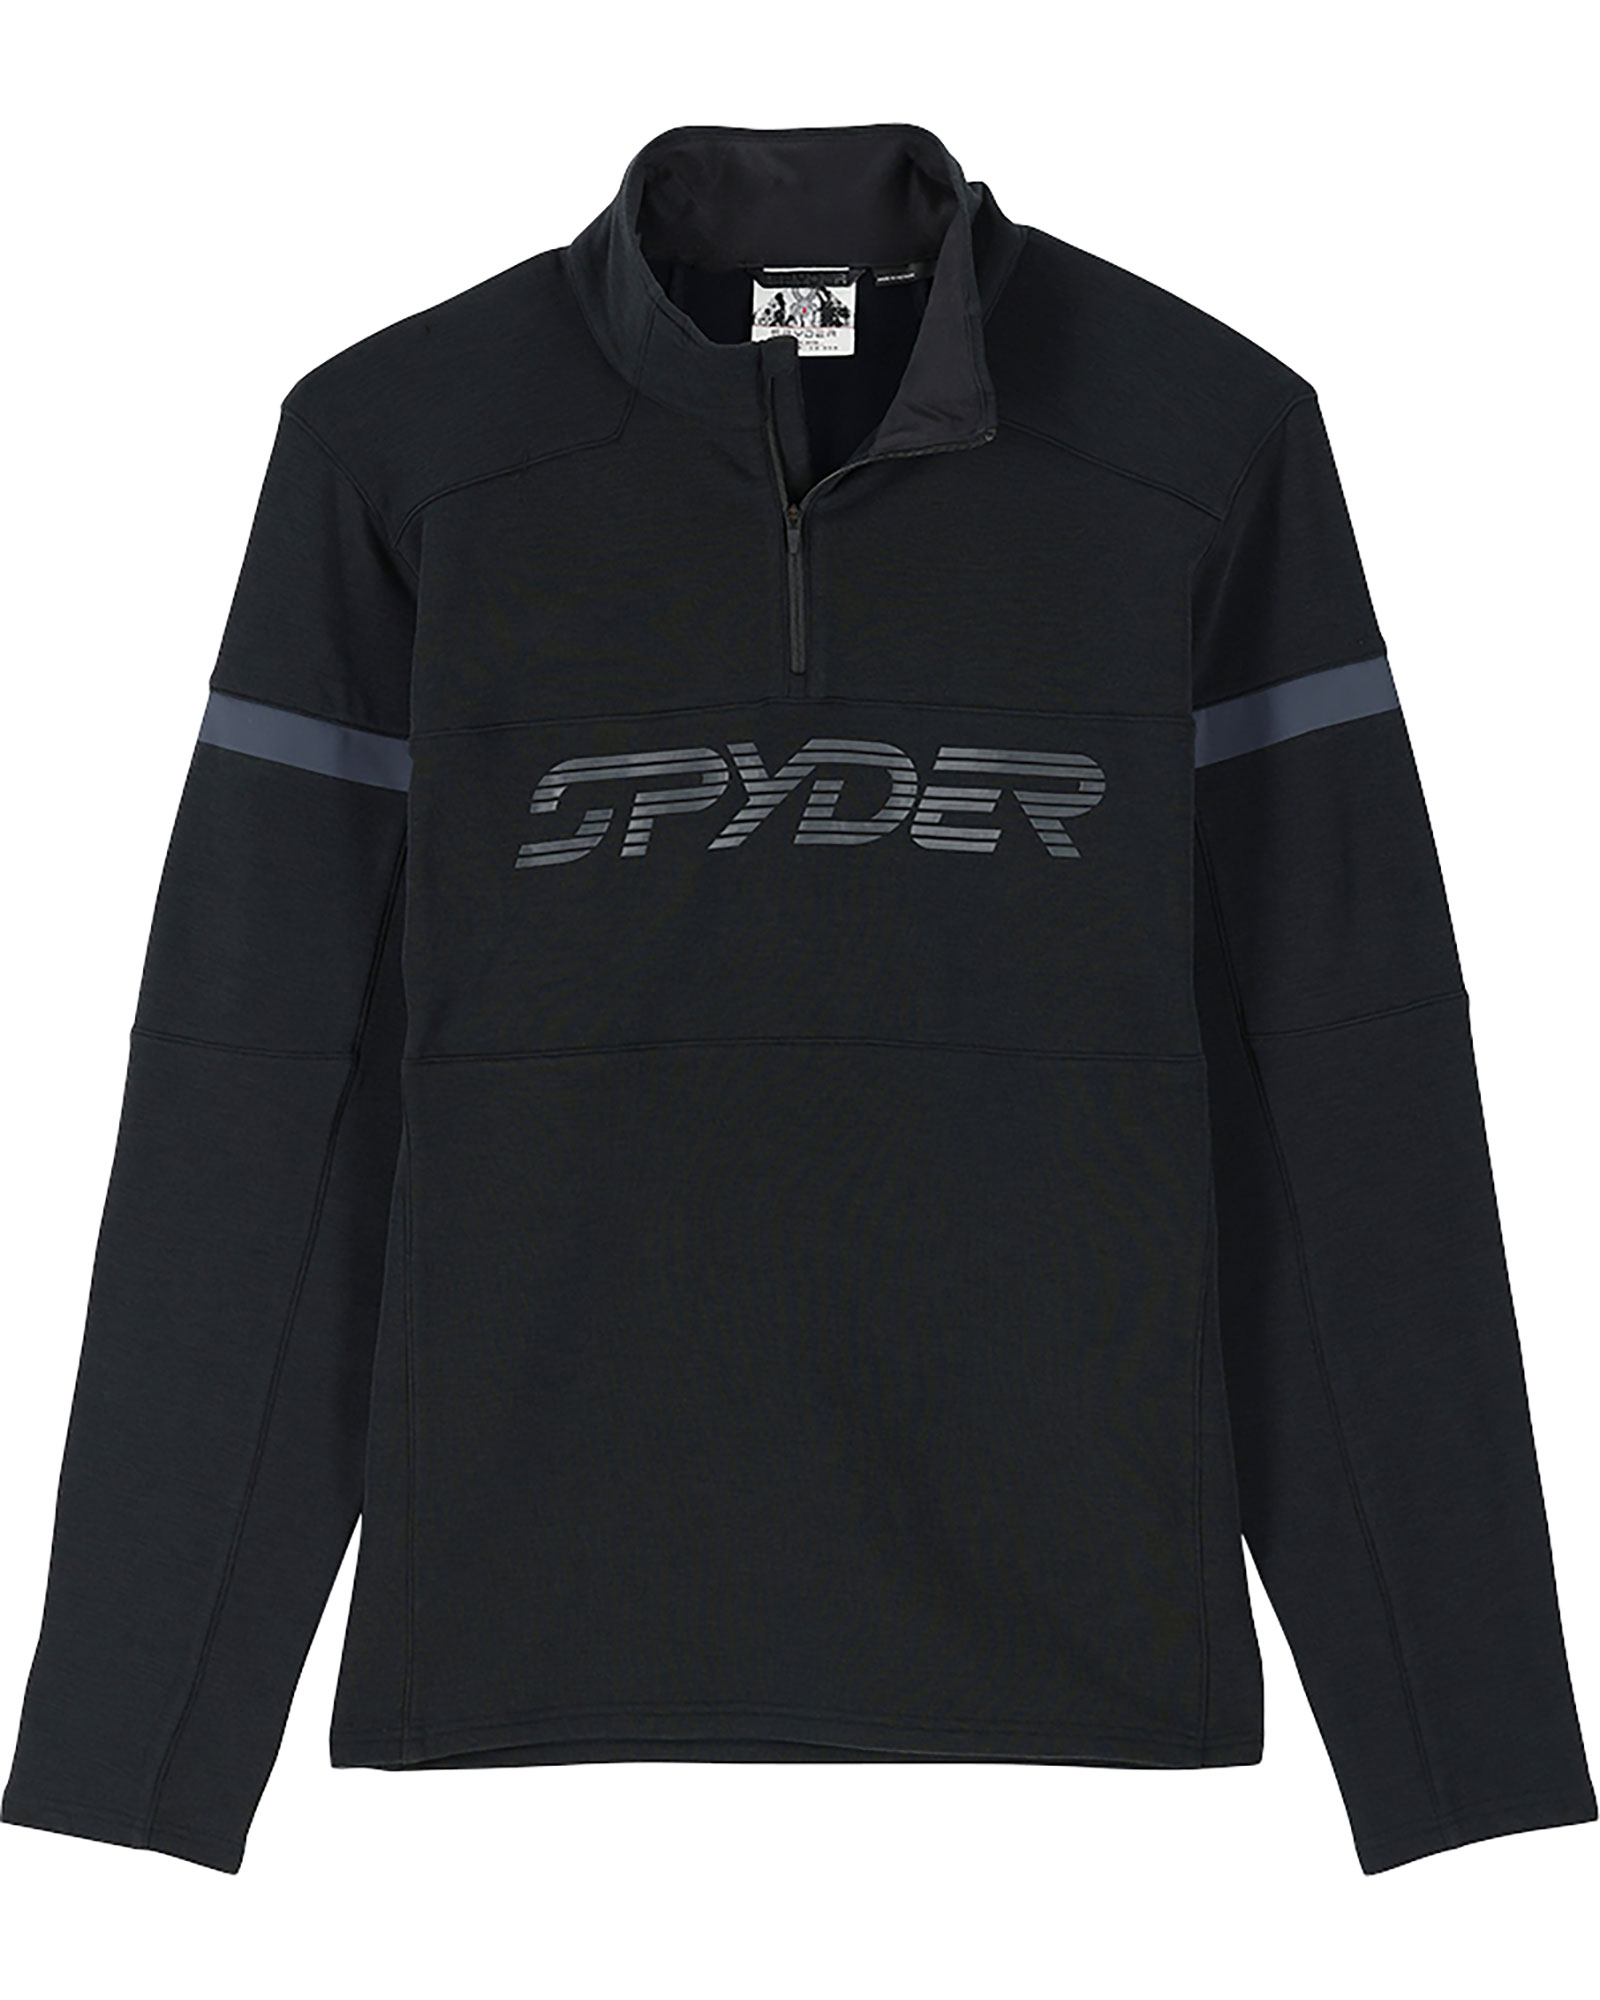 Spyder Men’s Speed Zip Neck - black XL